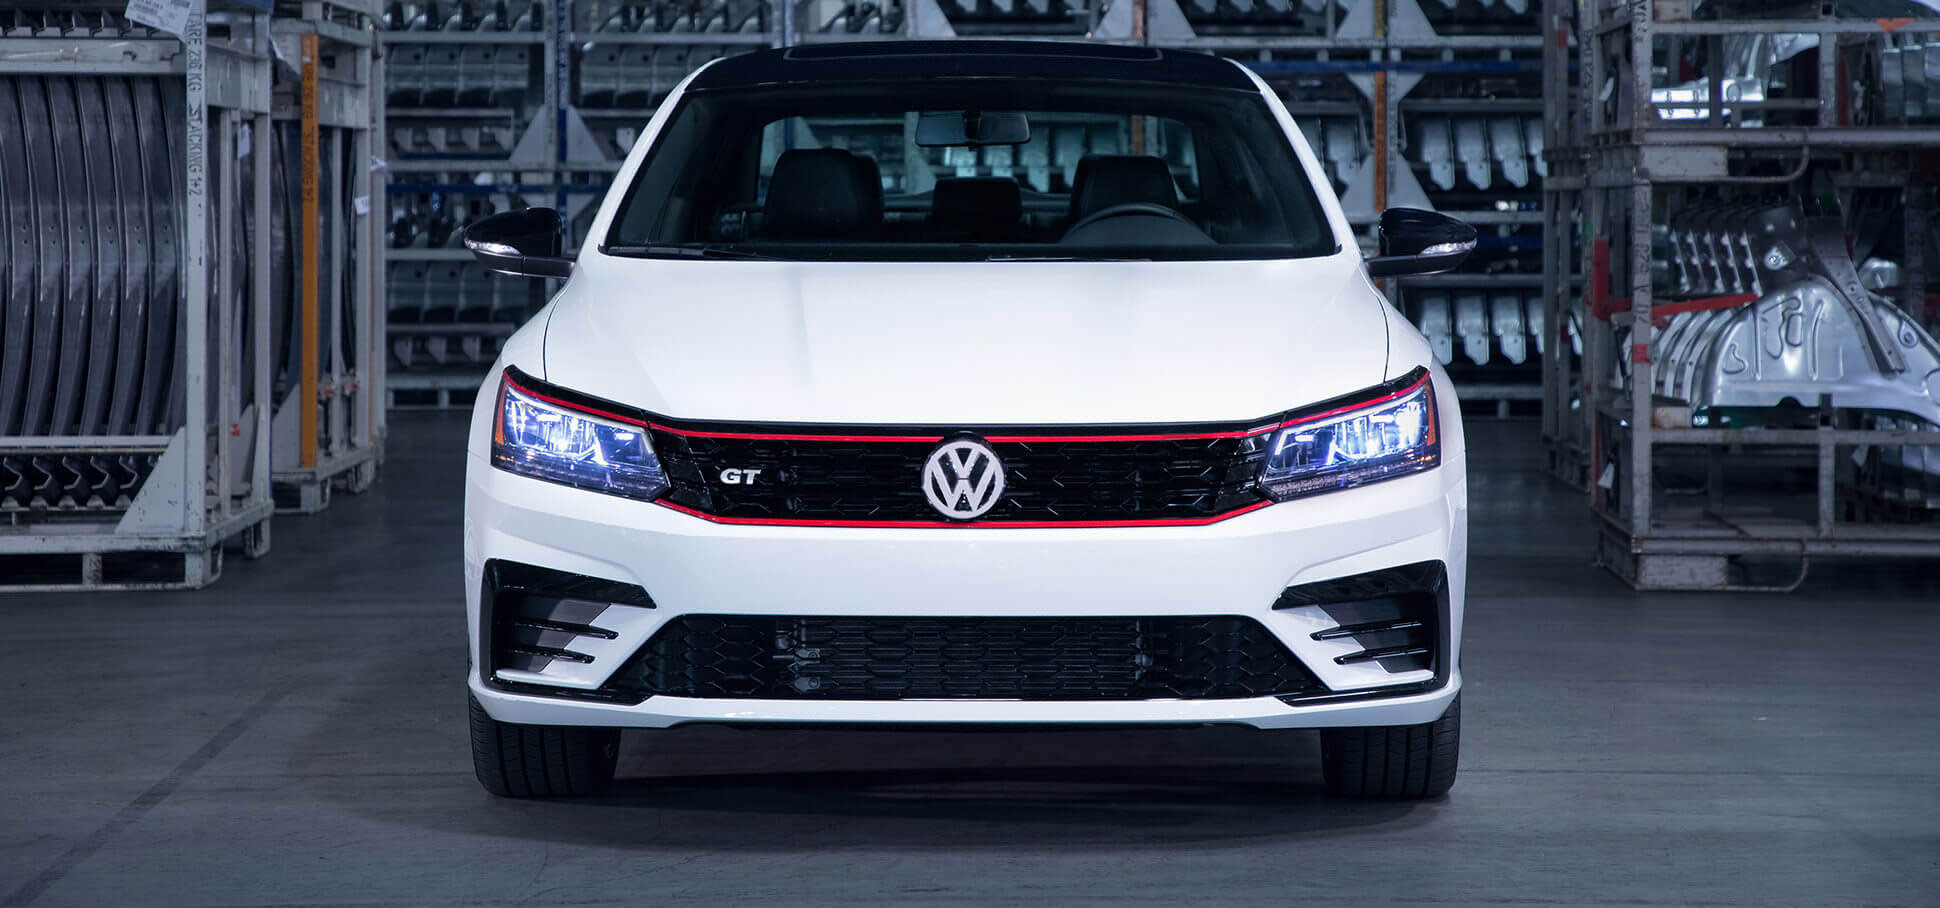 Volkswagen Dandenong All Tek Automotives